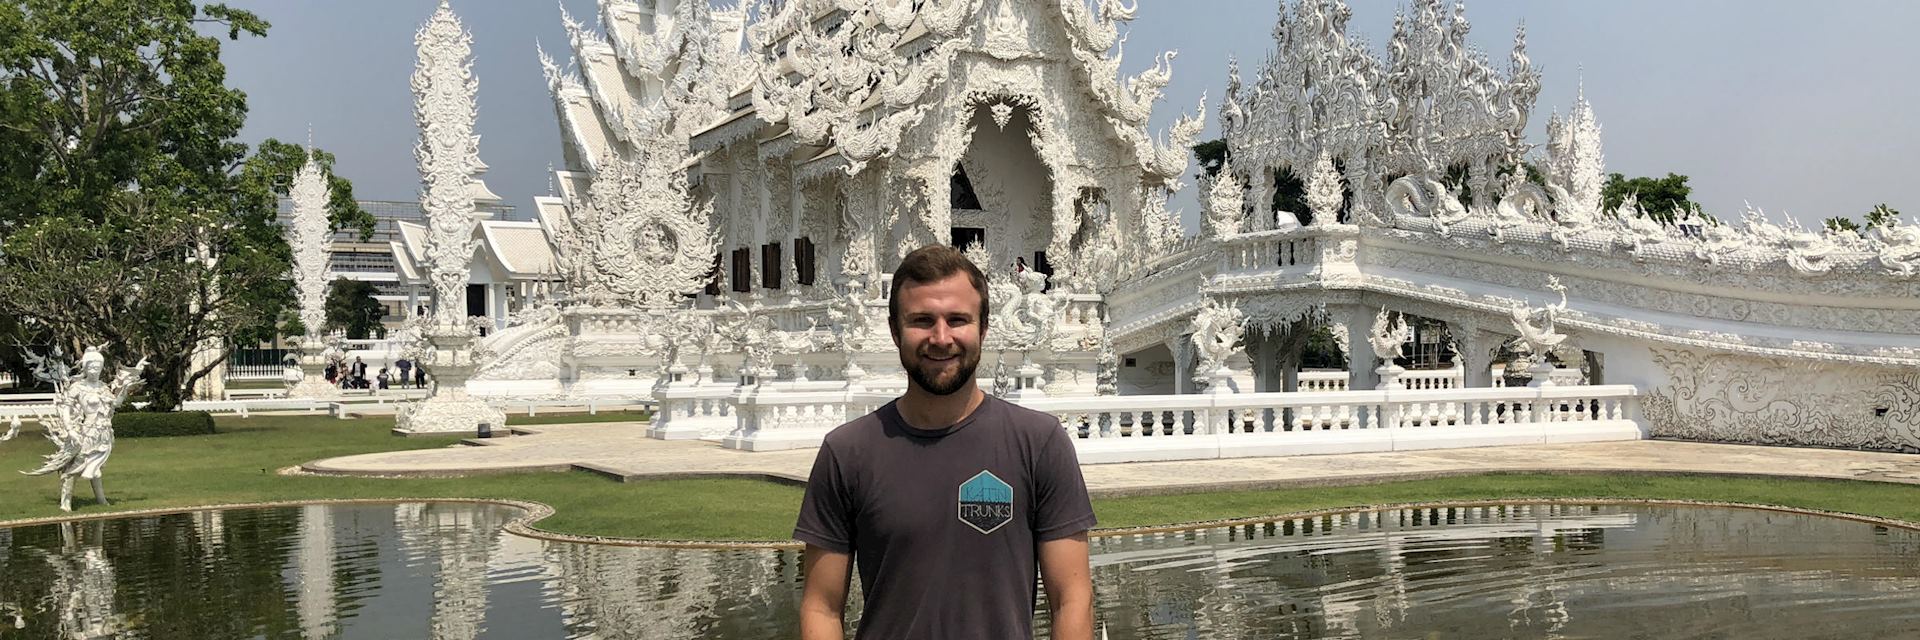 Nick M at Chiang Rai White Temple